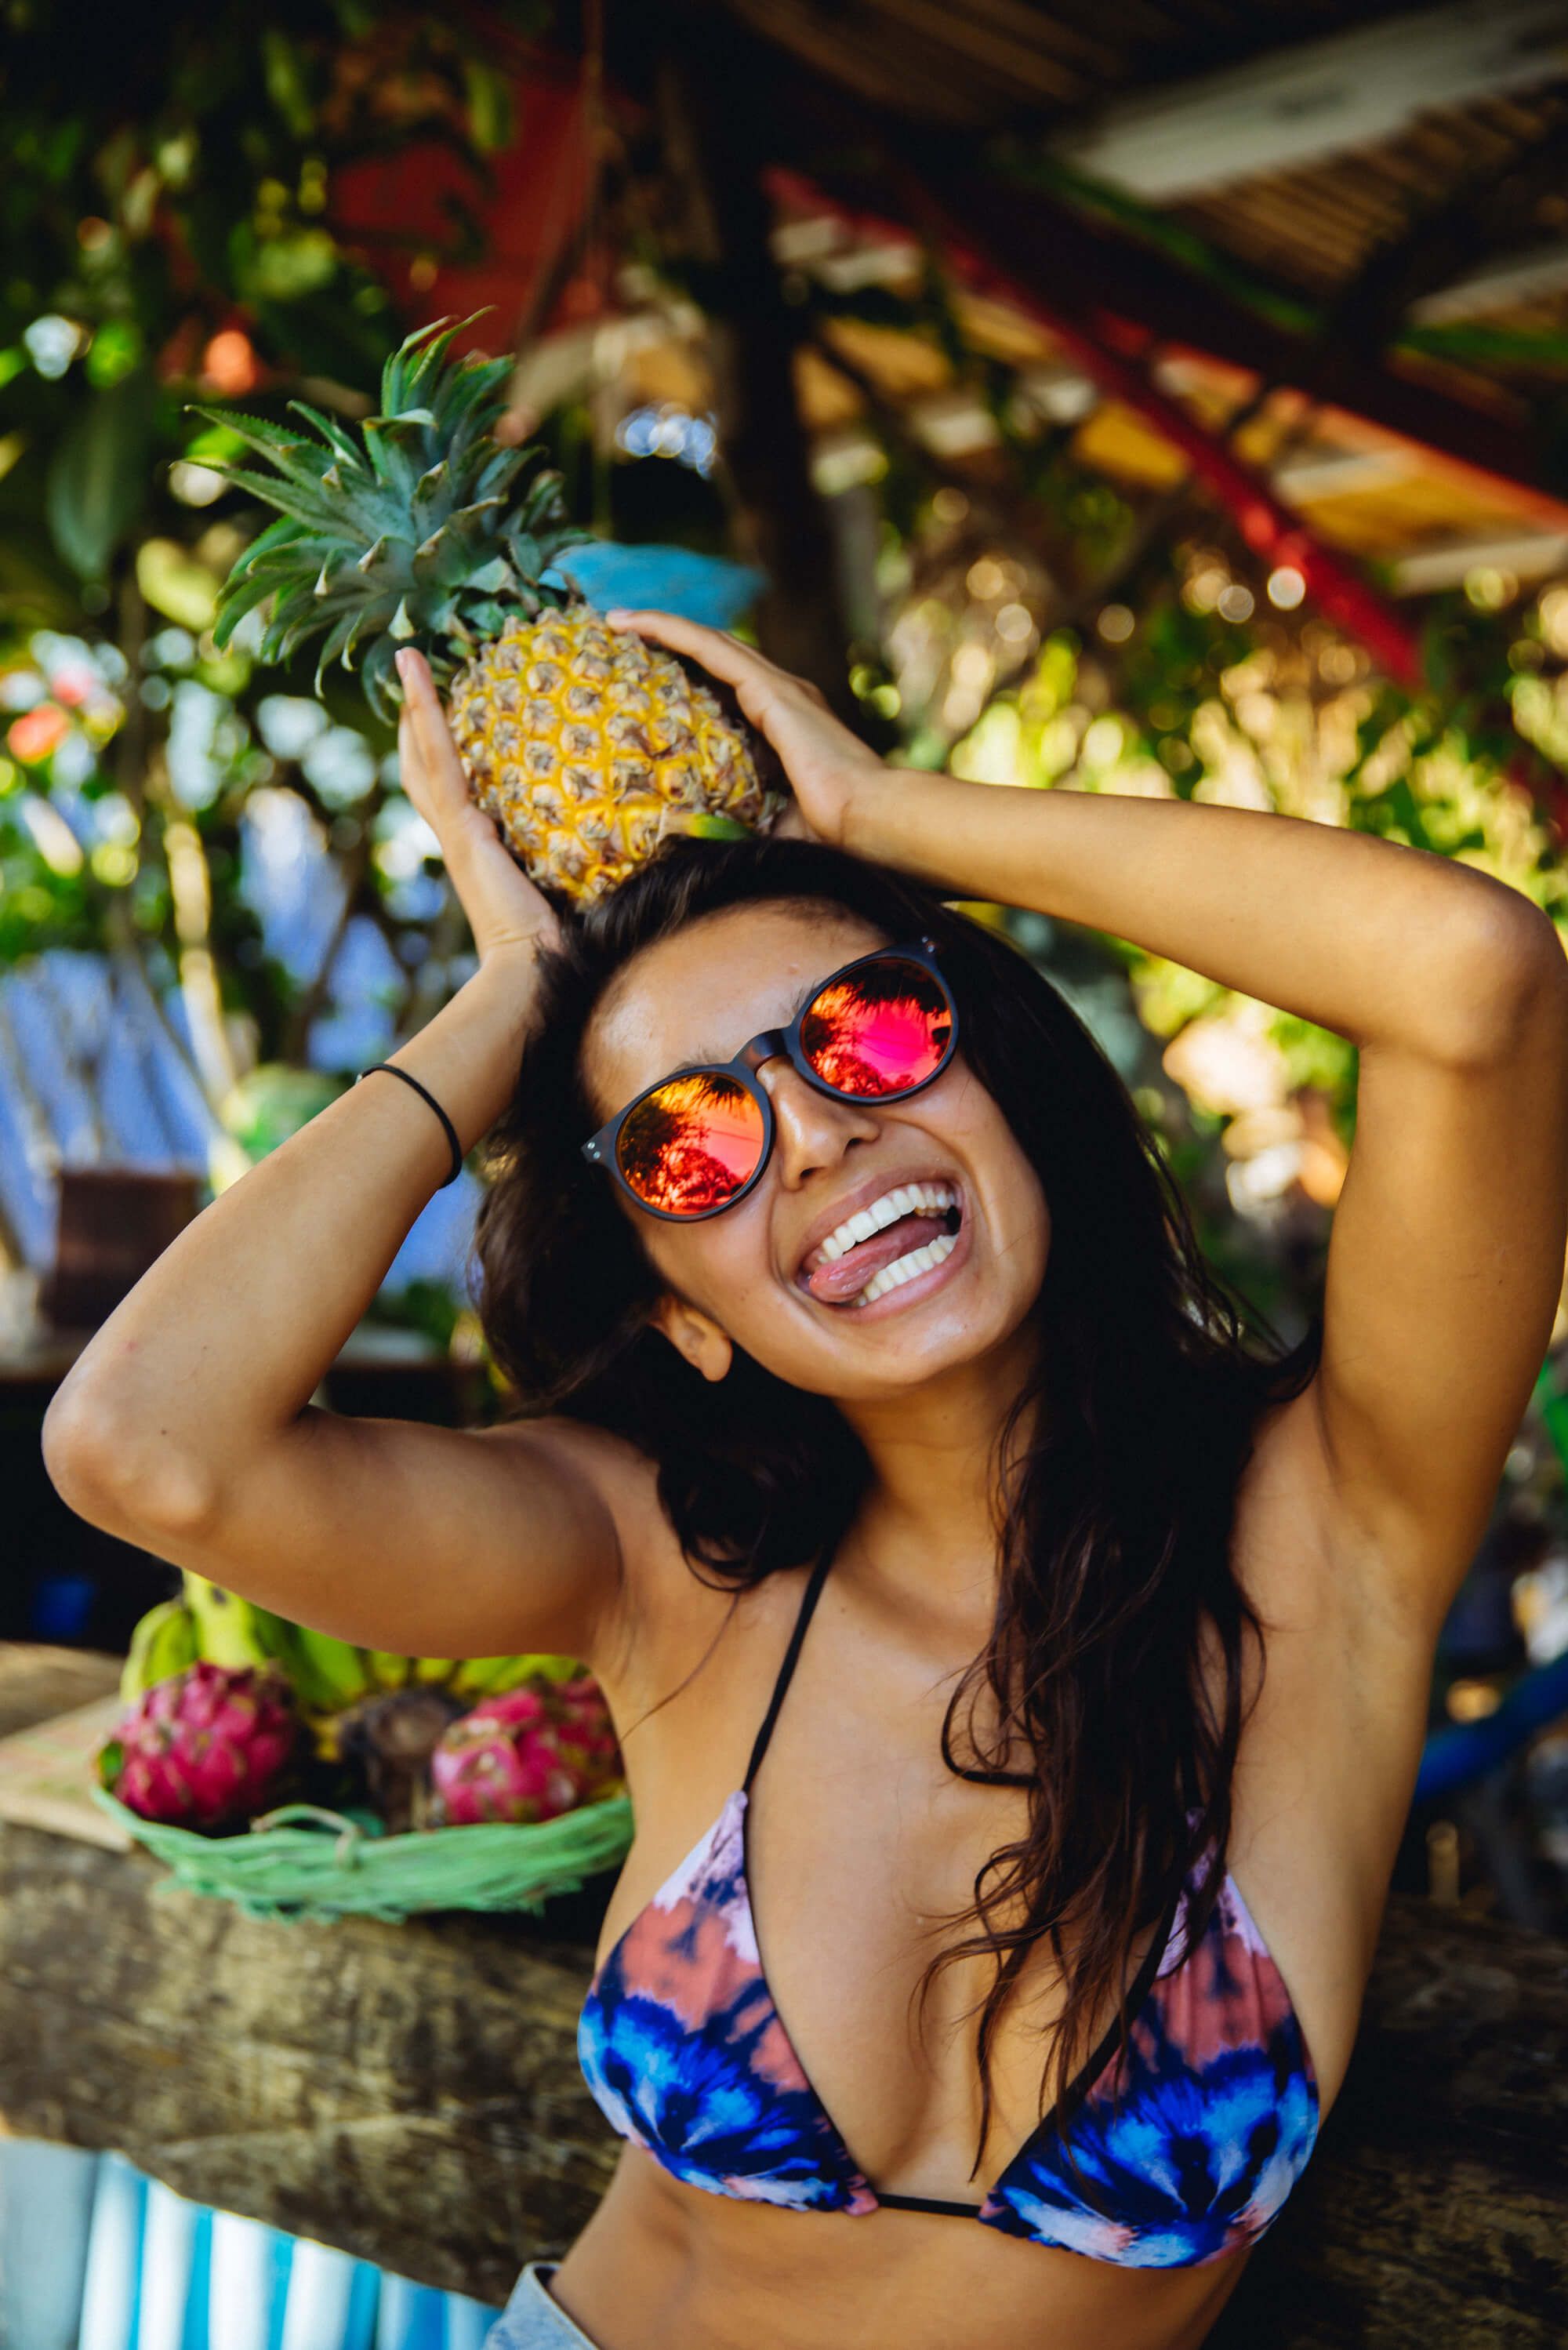 Nathalya enjoying some pineapple with her Melon Echo Sunglasses